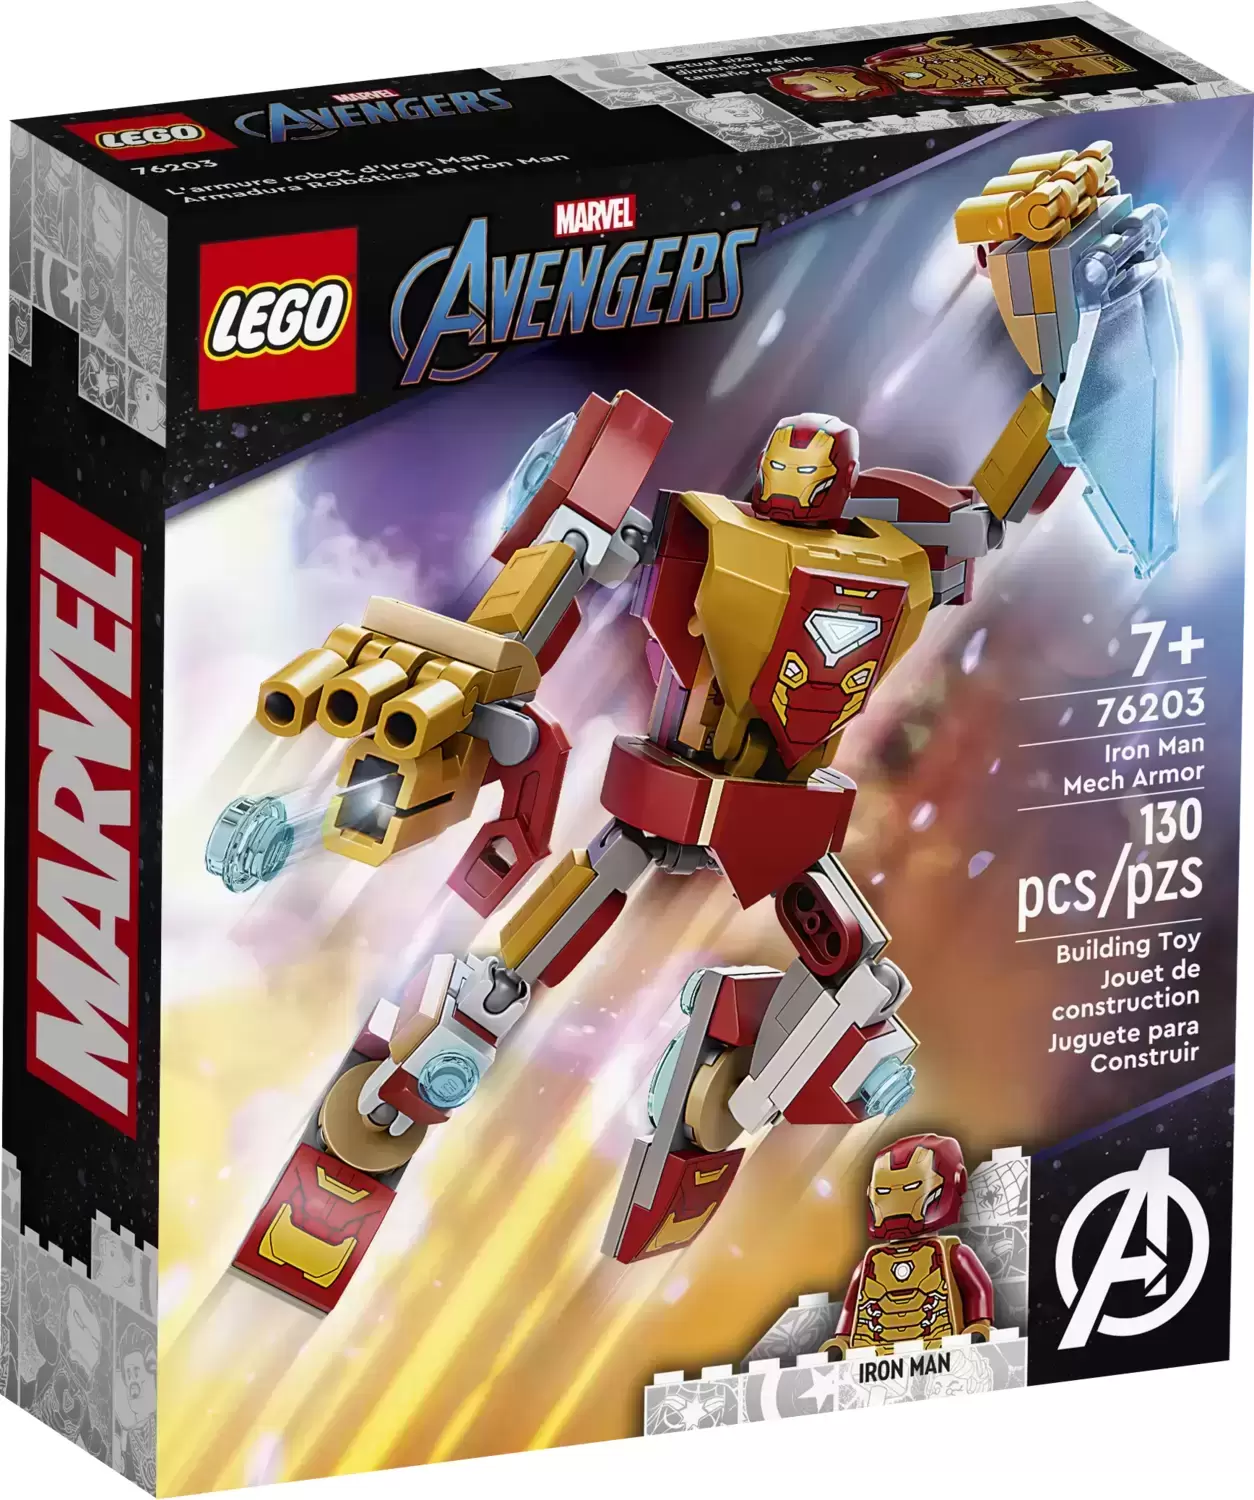 LEGO MARVEL Super Heroes - Iron Man Mech Armor